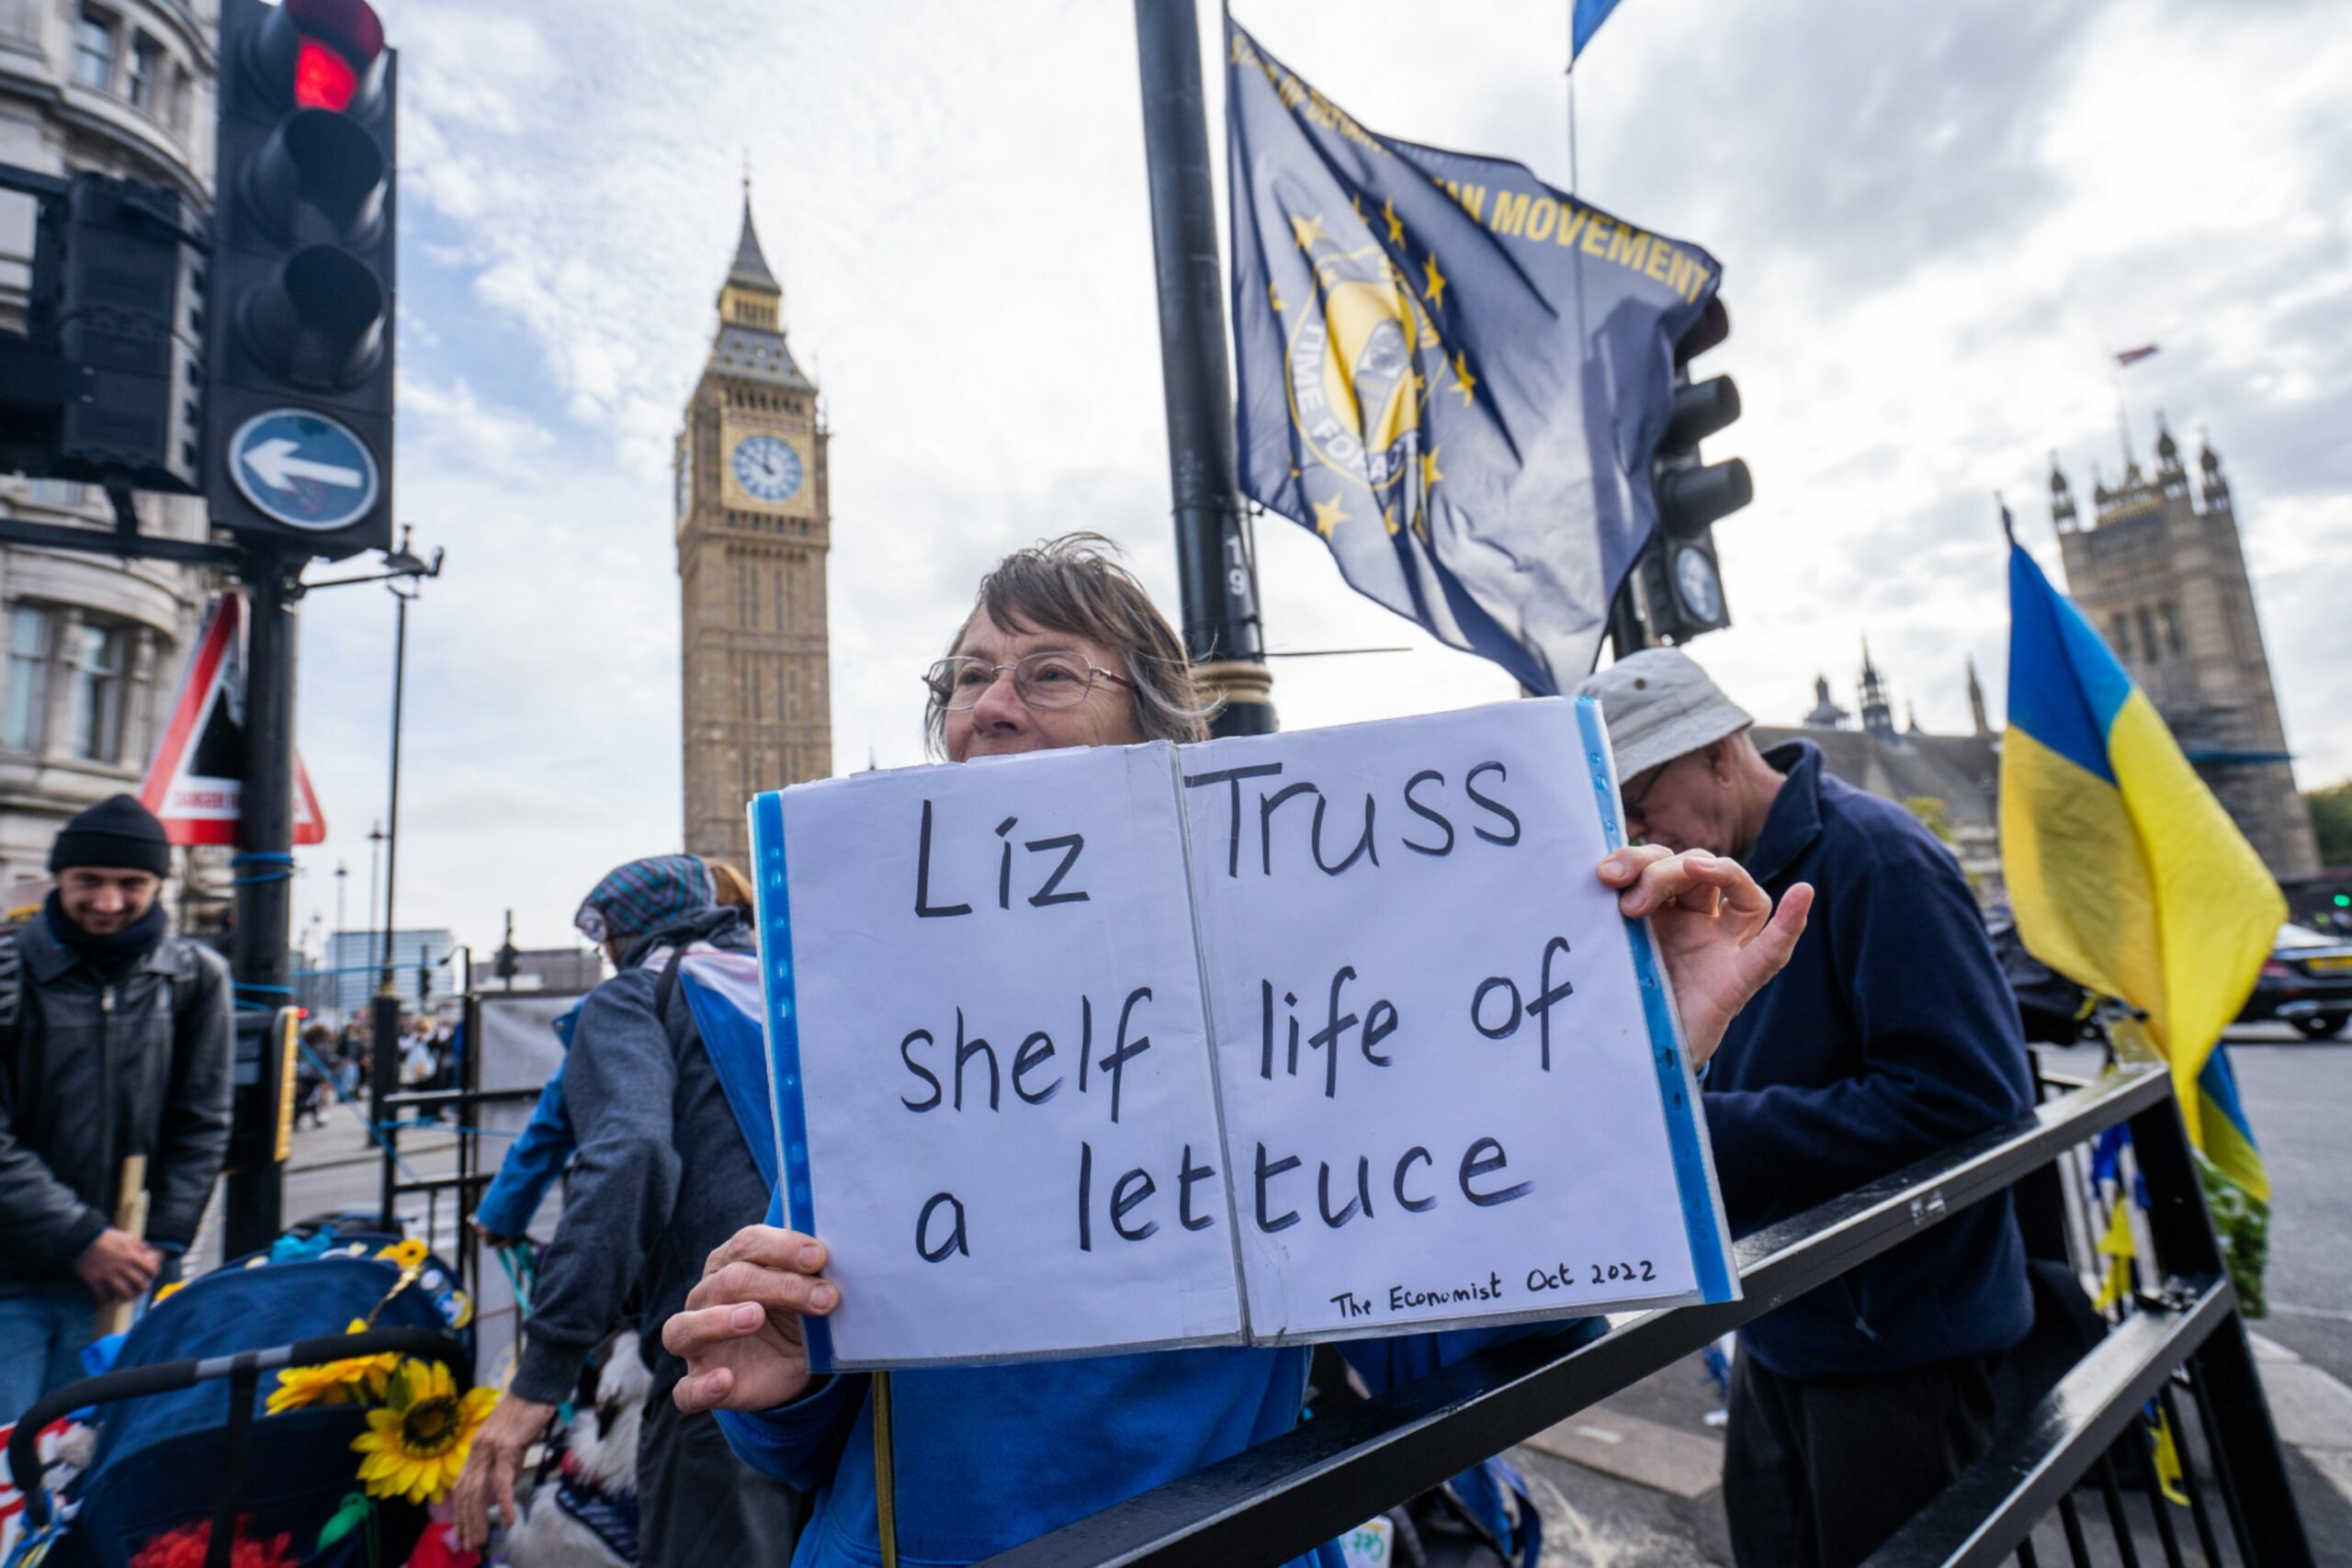 Protestor holds up sign outside Westminster saying: "Liz Truss shelf life of a lettuce"